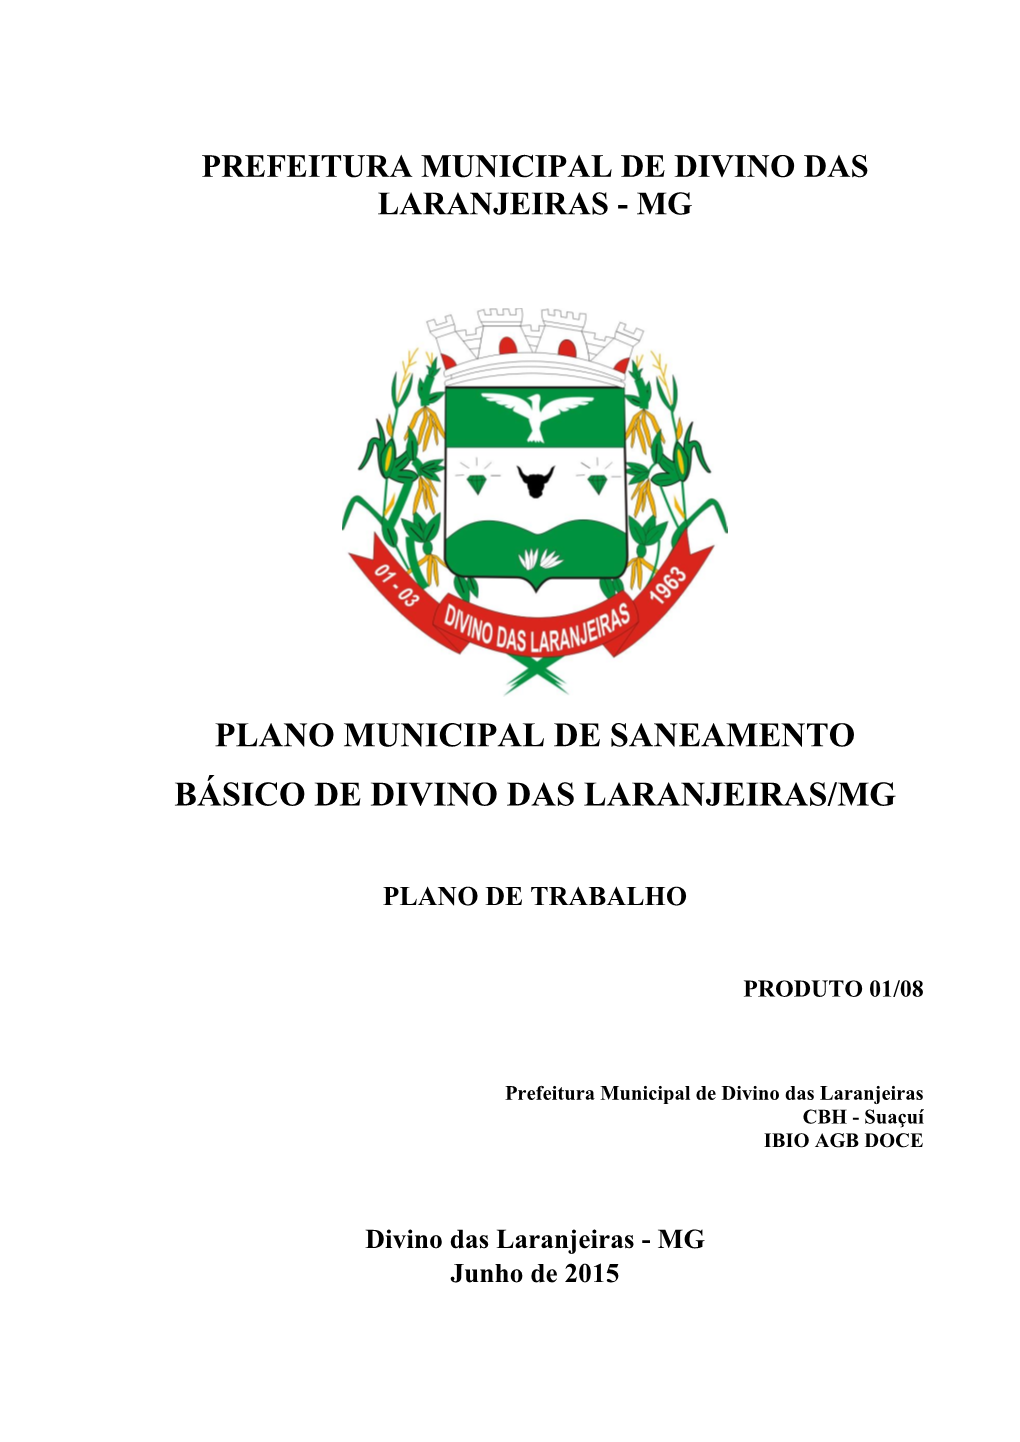 Plano Municipal De Saneamento Básico De Divino Das Laranjeiras/Mg